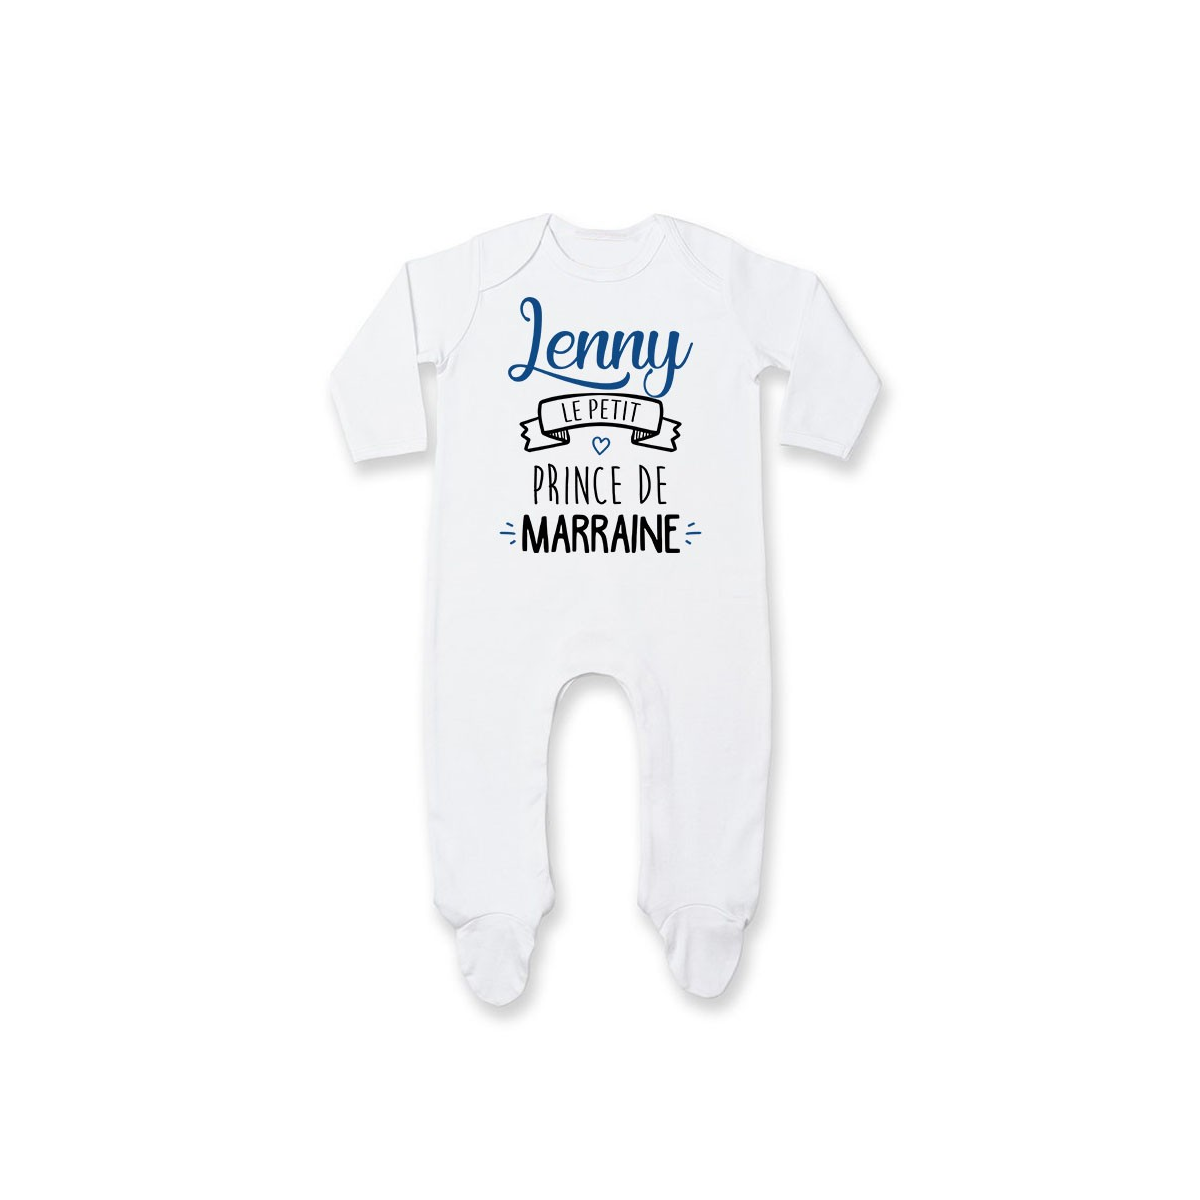 Pyjama bébé personnalisé " prénom " le petit prince de marraine